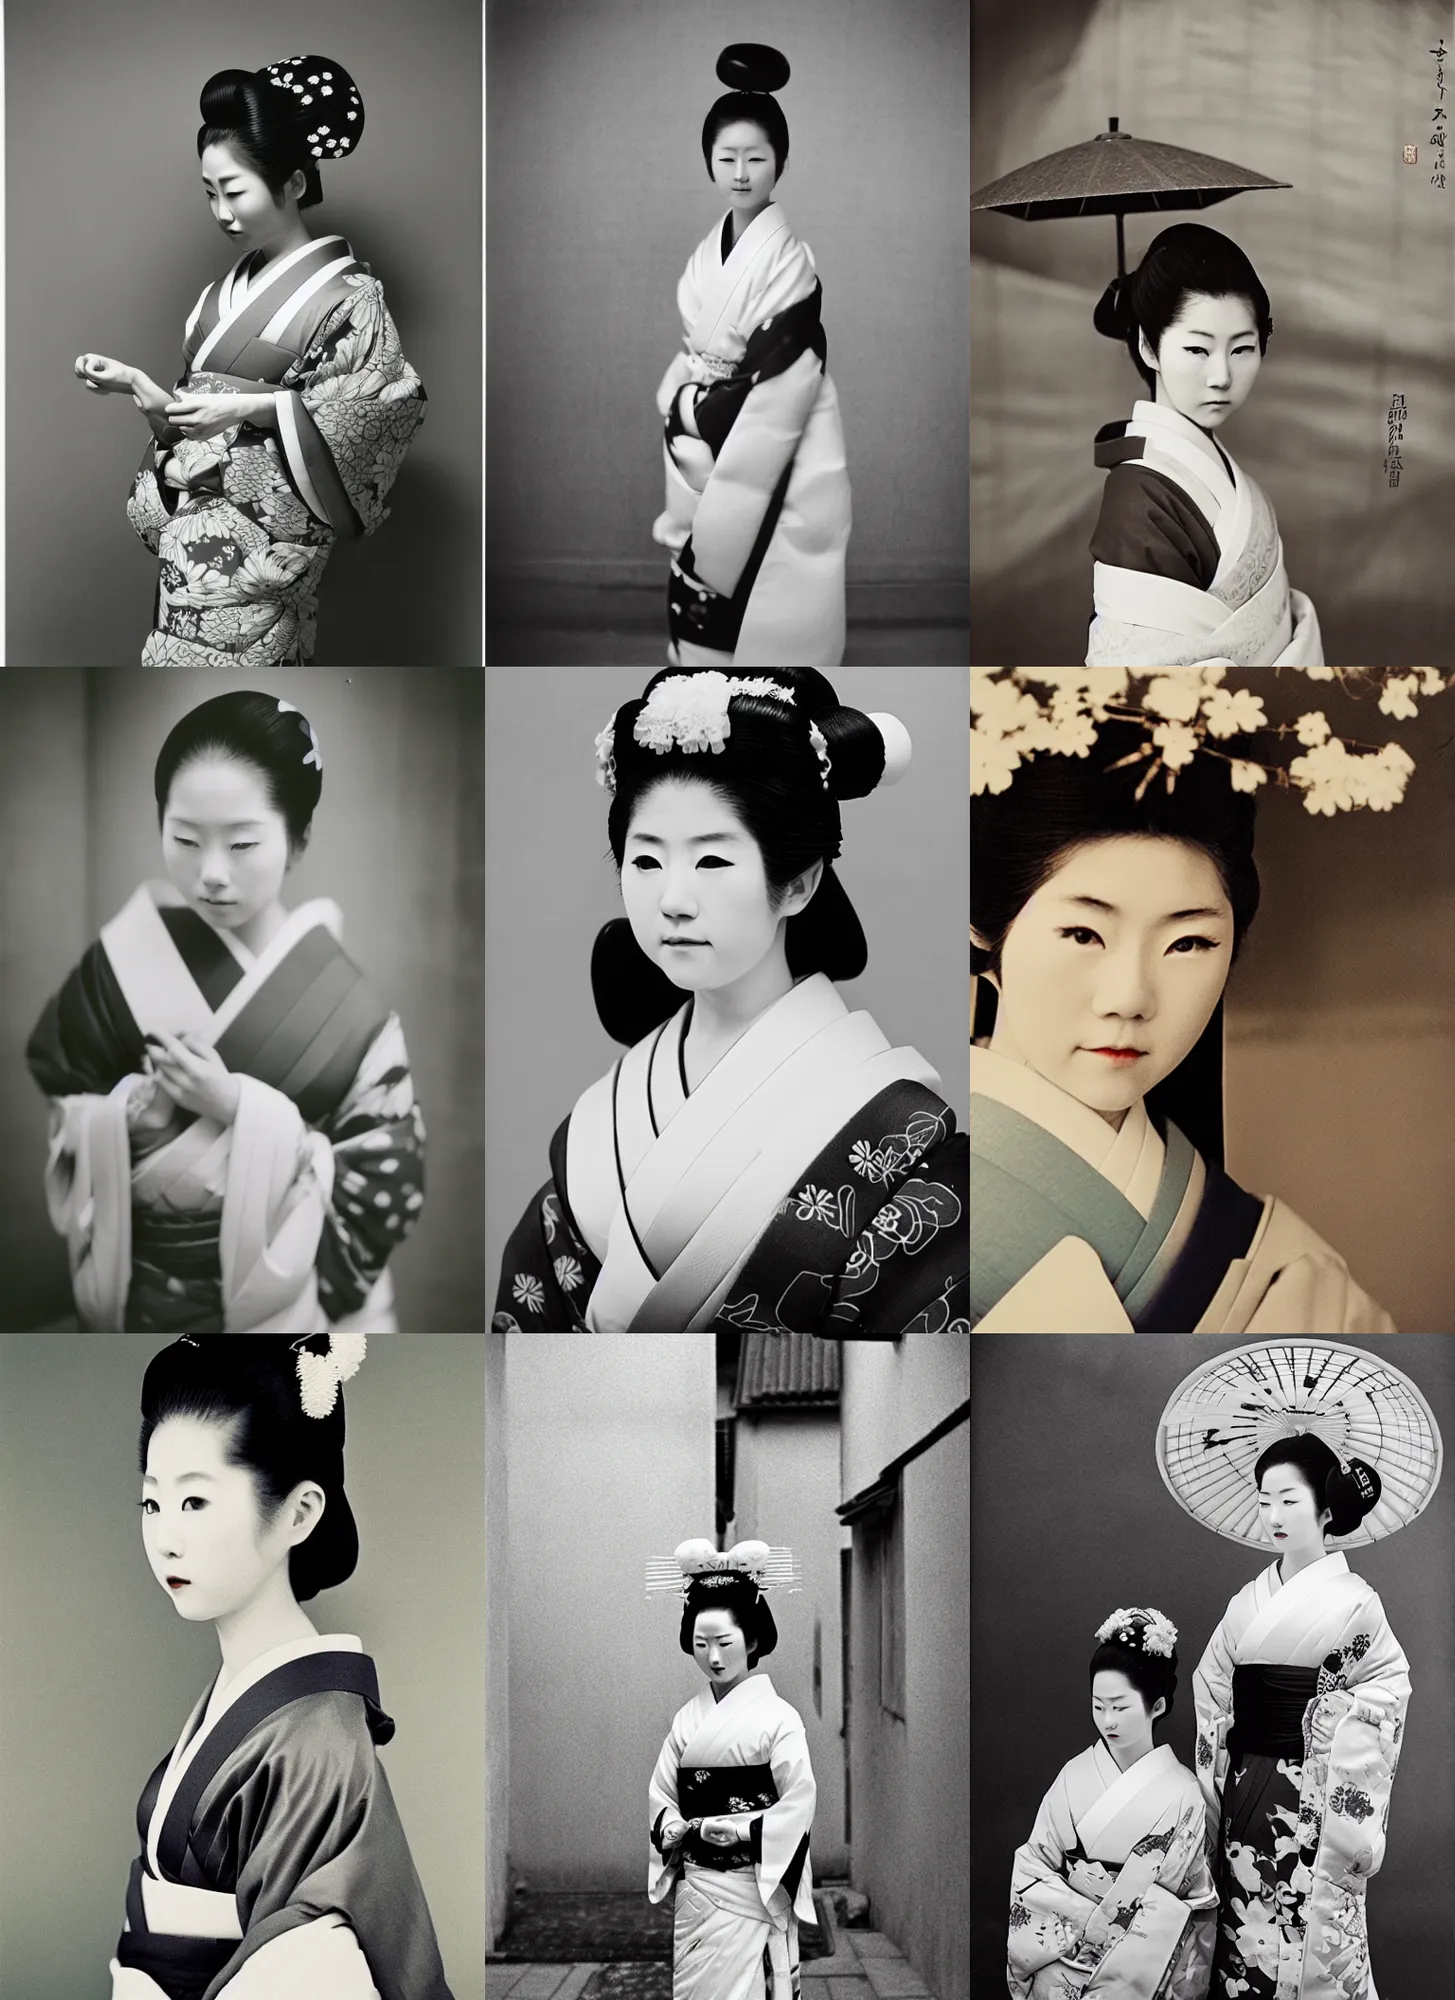 Prompt: Portrait Photograph of a Japanese Geisha Rollei Paul & Reinhold 640